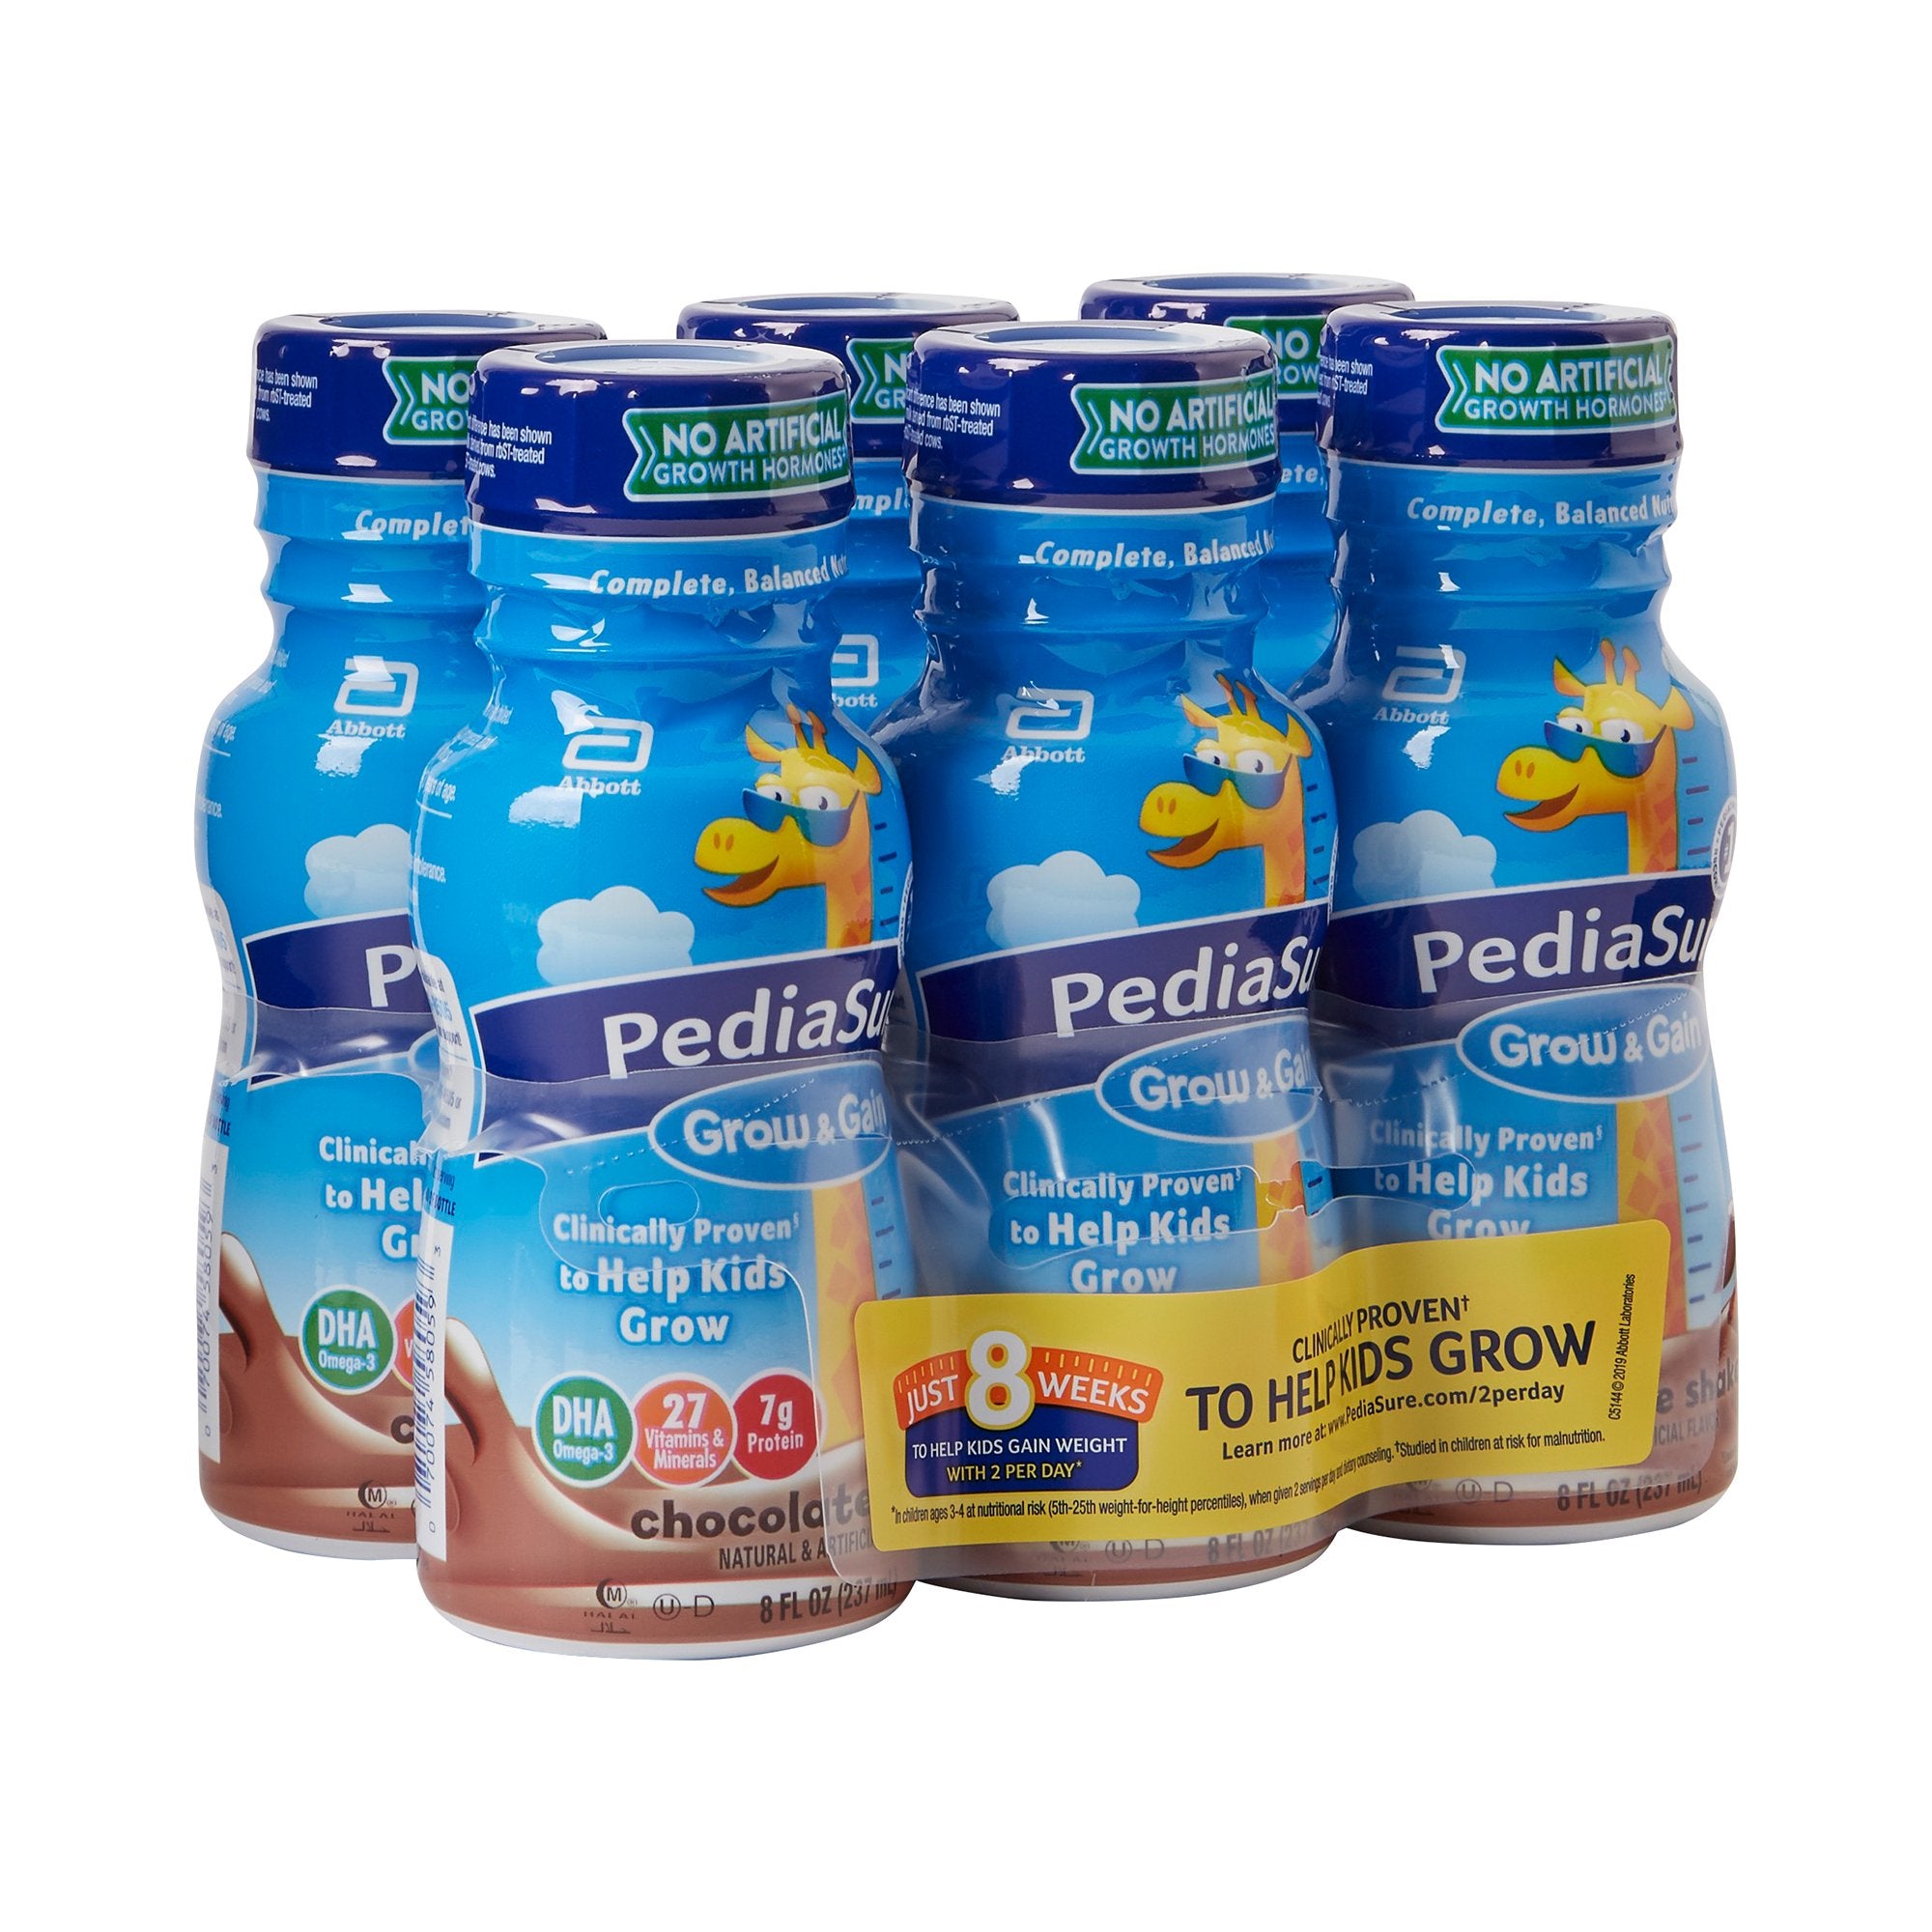 Pediatric Oral Supplement PediaSure Grow & Gain Shake 8 oz. Bottle Liquid